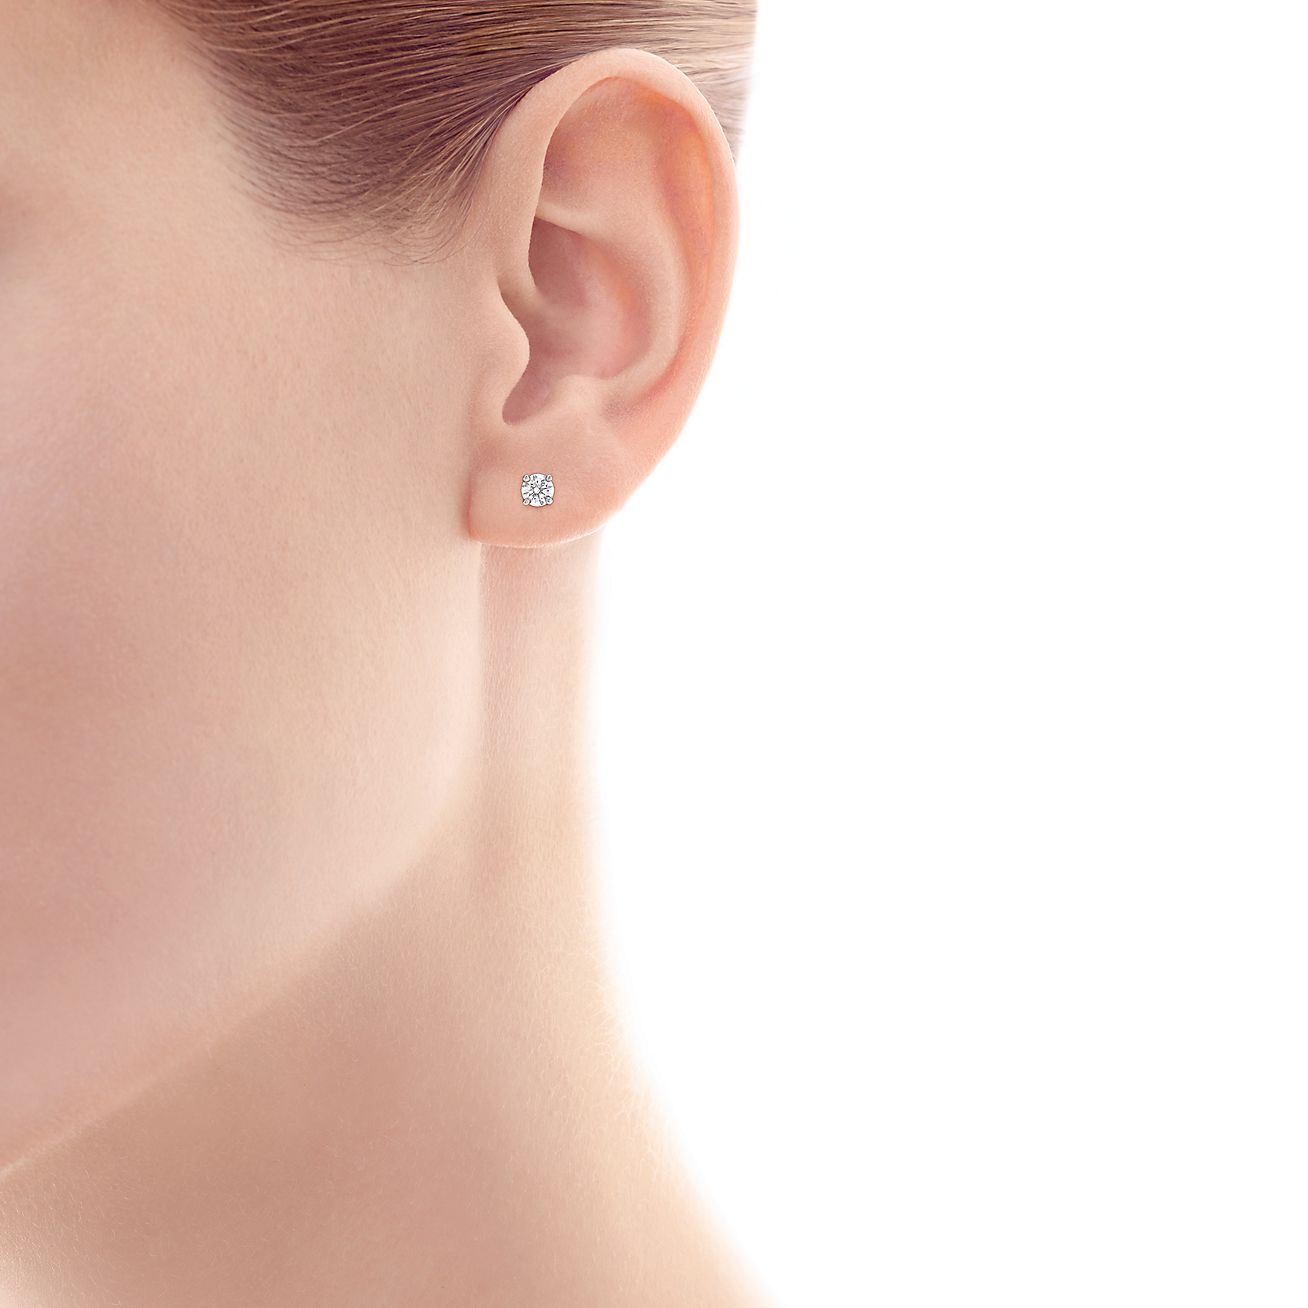 Tiffany solitaire diamond earring in 